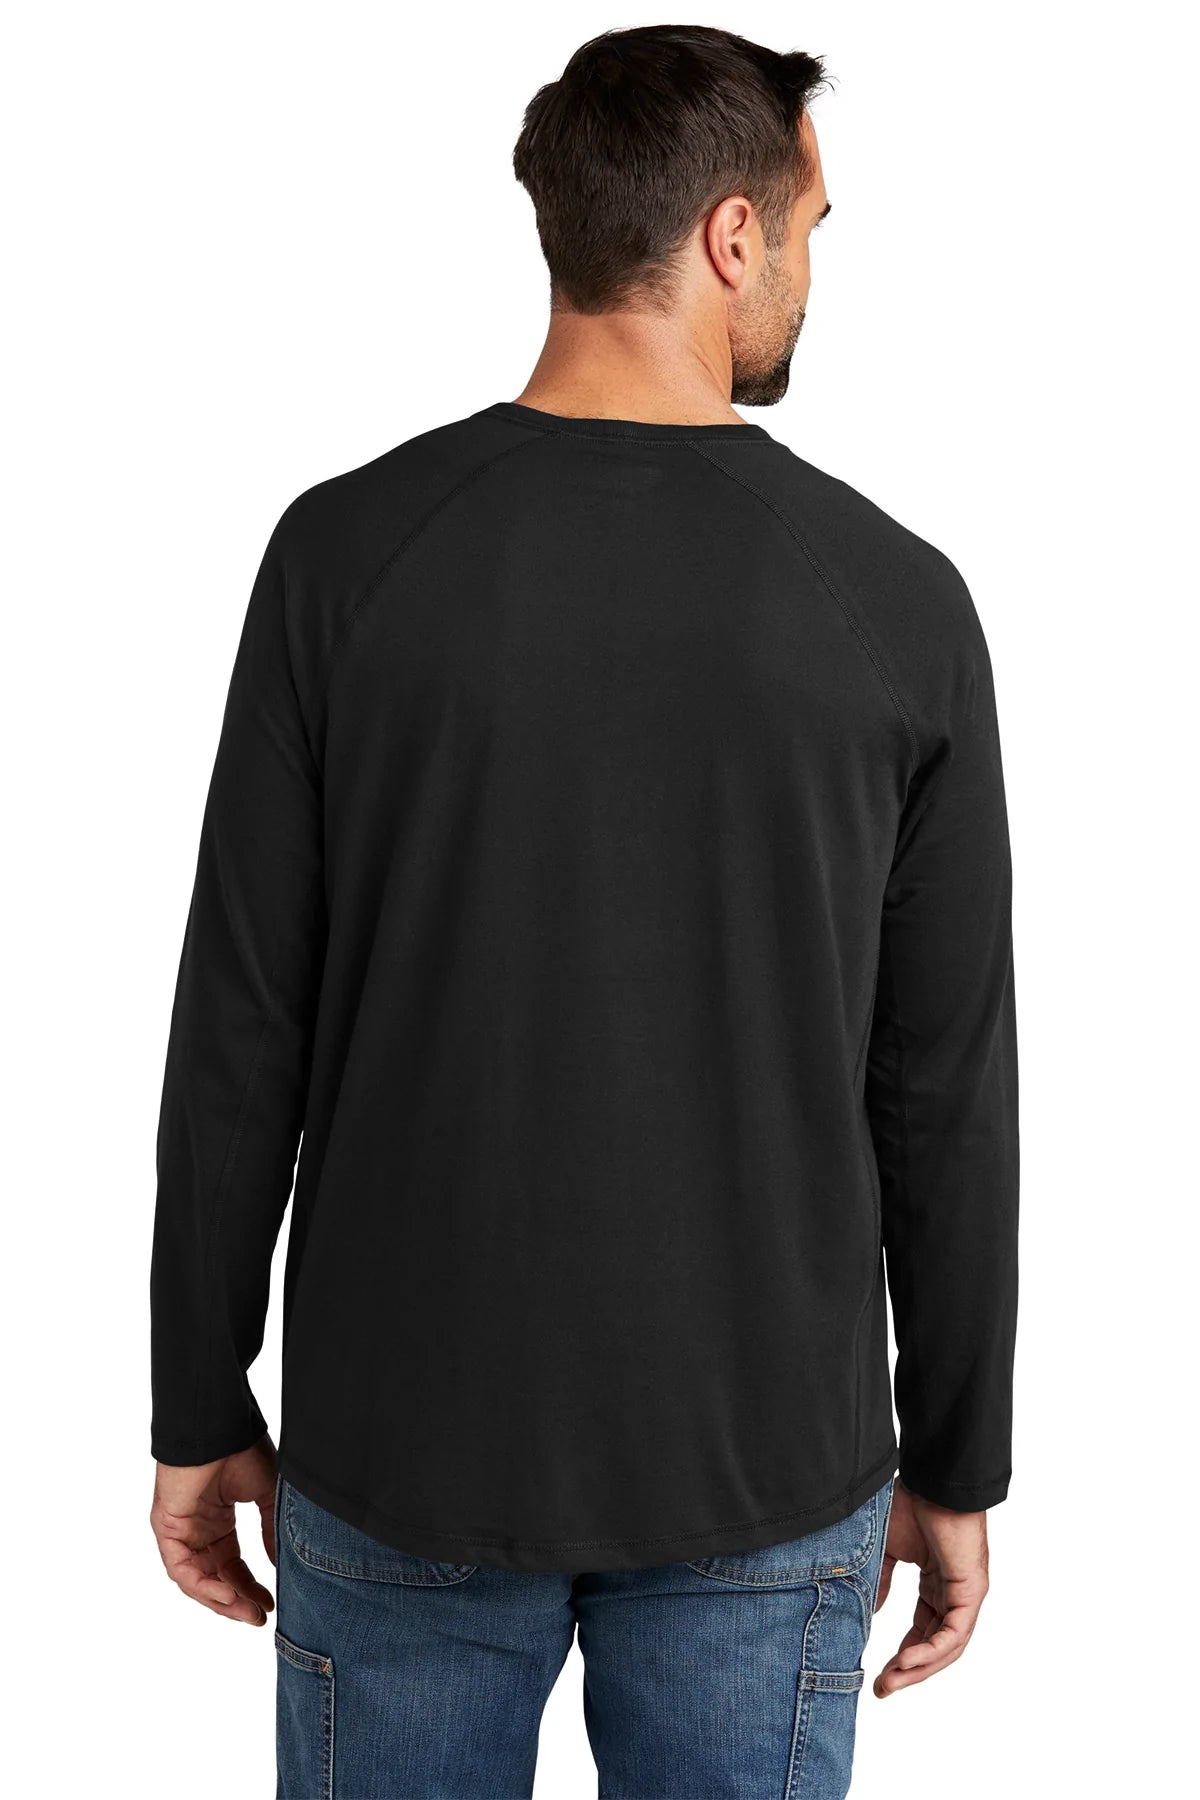 Carhartt Long Sleeve Pocket T-Shirt, Black